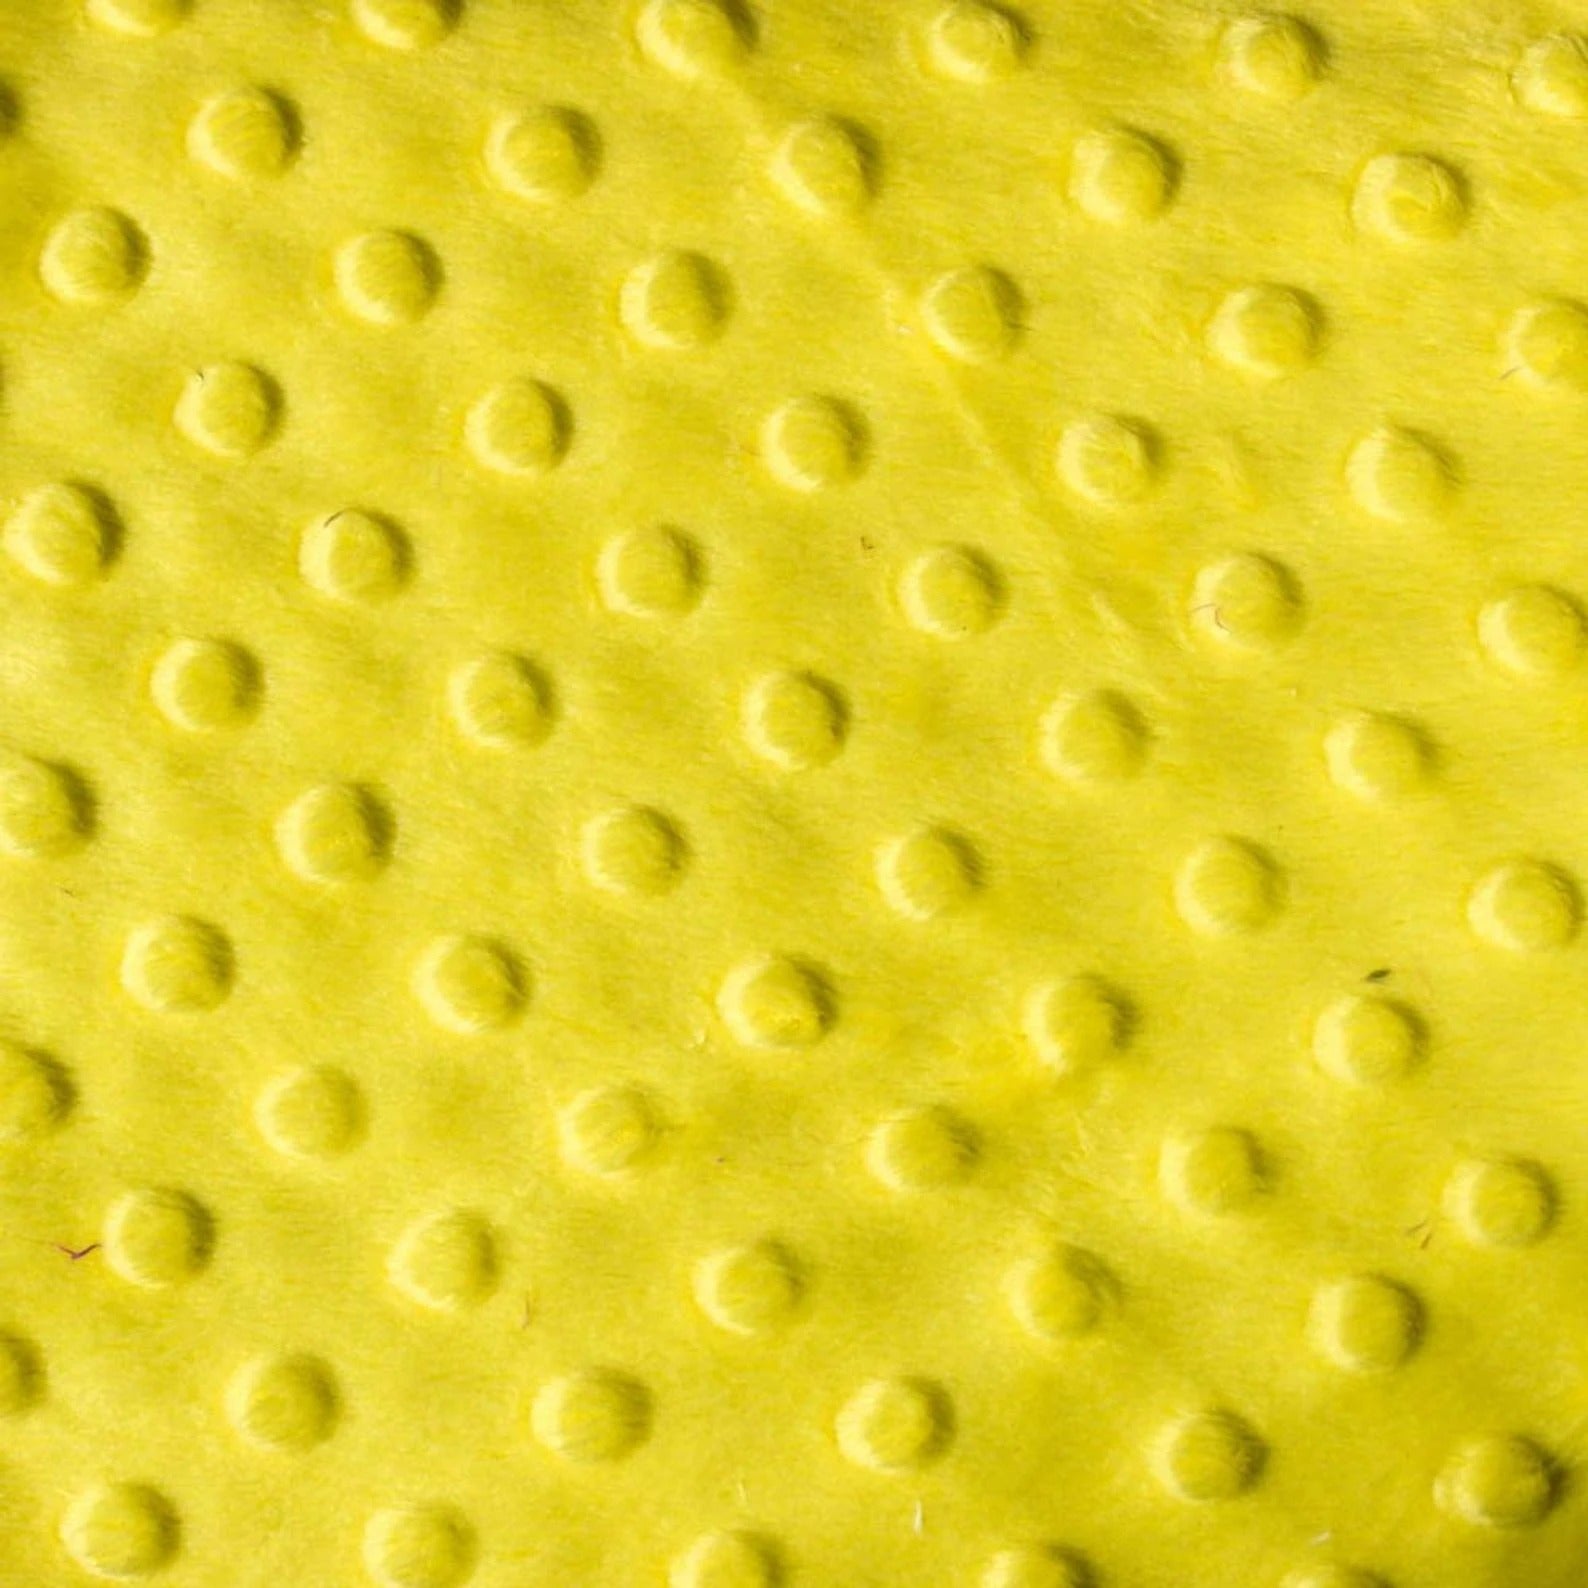 Bubble Polka Dot Minky Fabric By The Roll (20 Yards) Wholesale FabricMinkyICEFABRICICE FABRICSYellowBy The Roll (60" Wide)Bubble Polka Dot Minky Fabric By The Roll (20 Yards) Wholesale Fabric ICEFABRIC Yellow